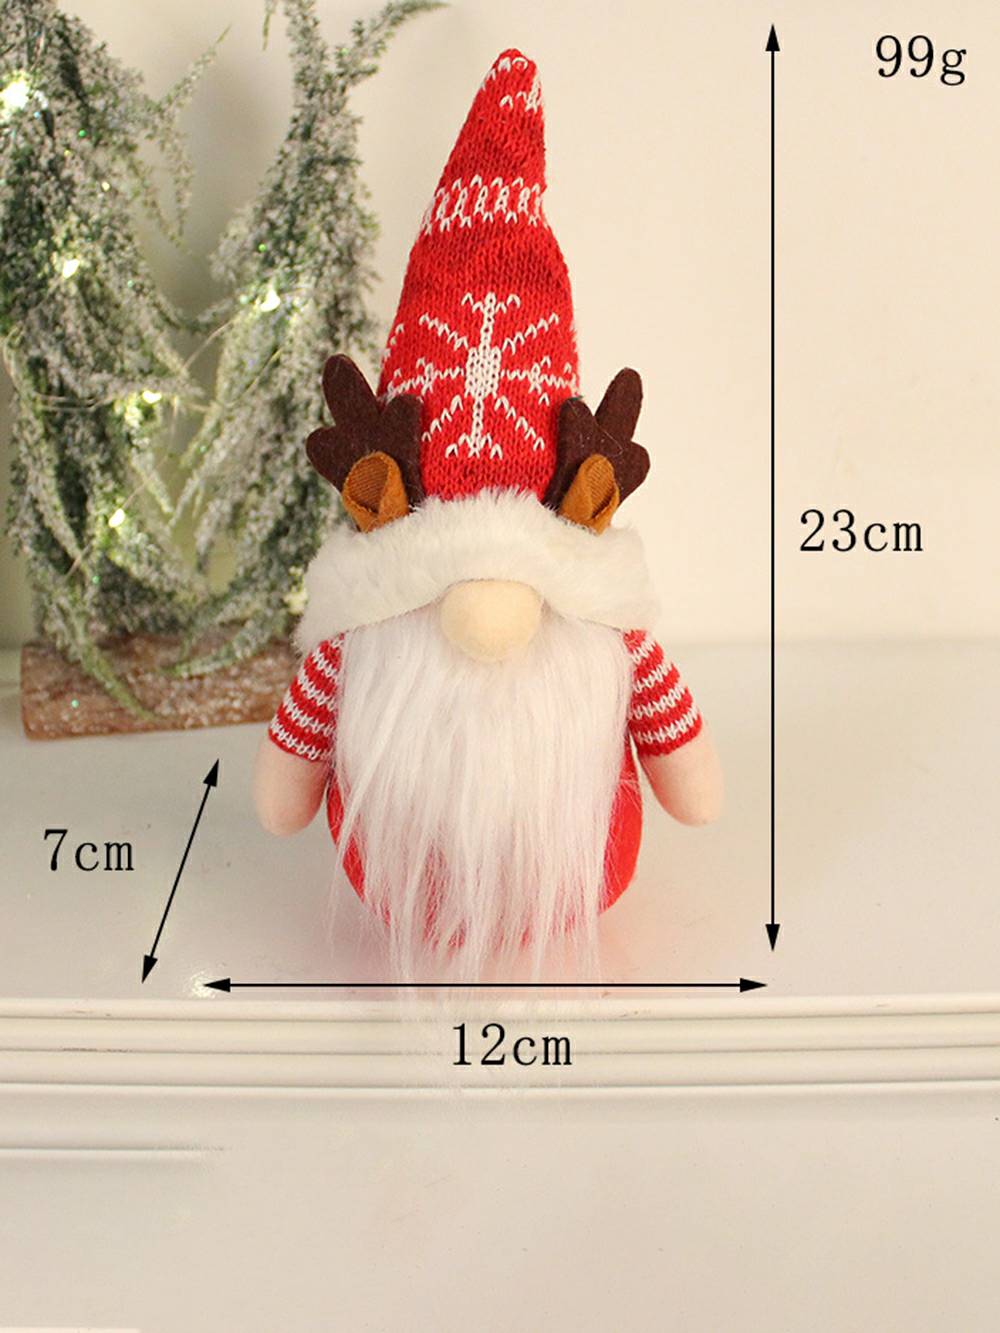 Christmas Plys Elf Decor: Flettet & skægget pardukke med gevirer